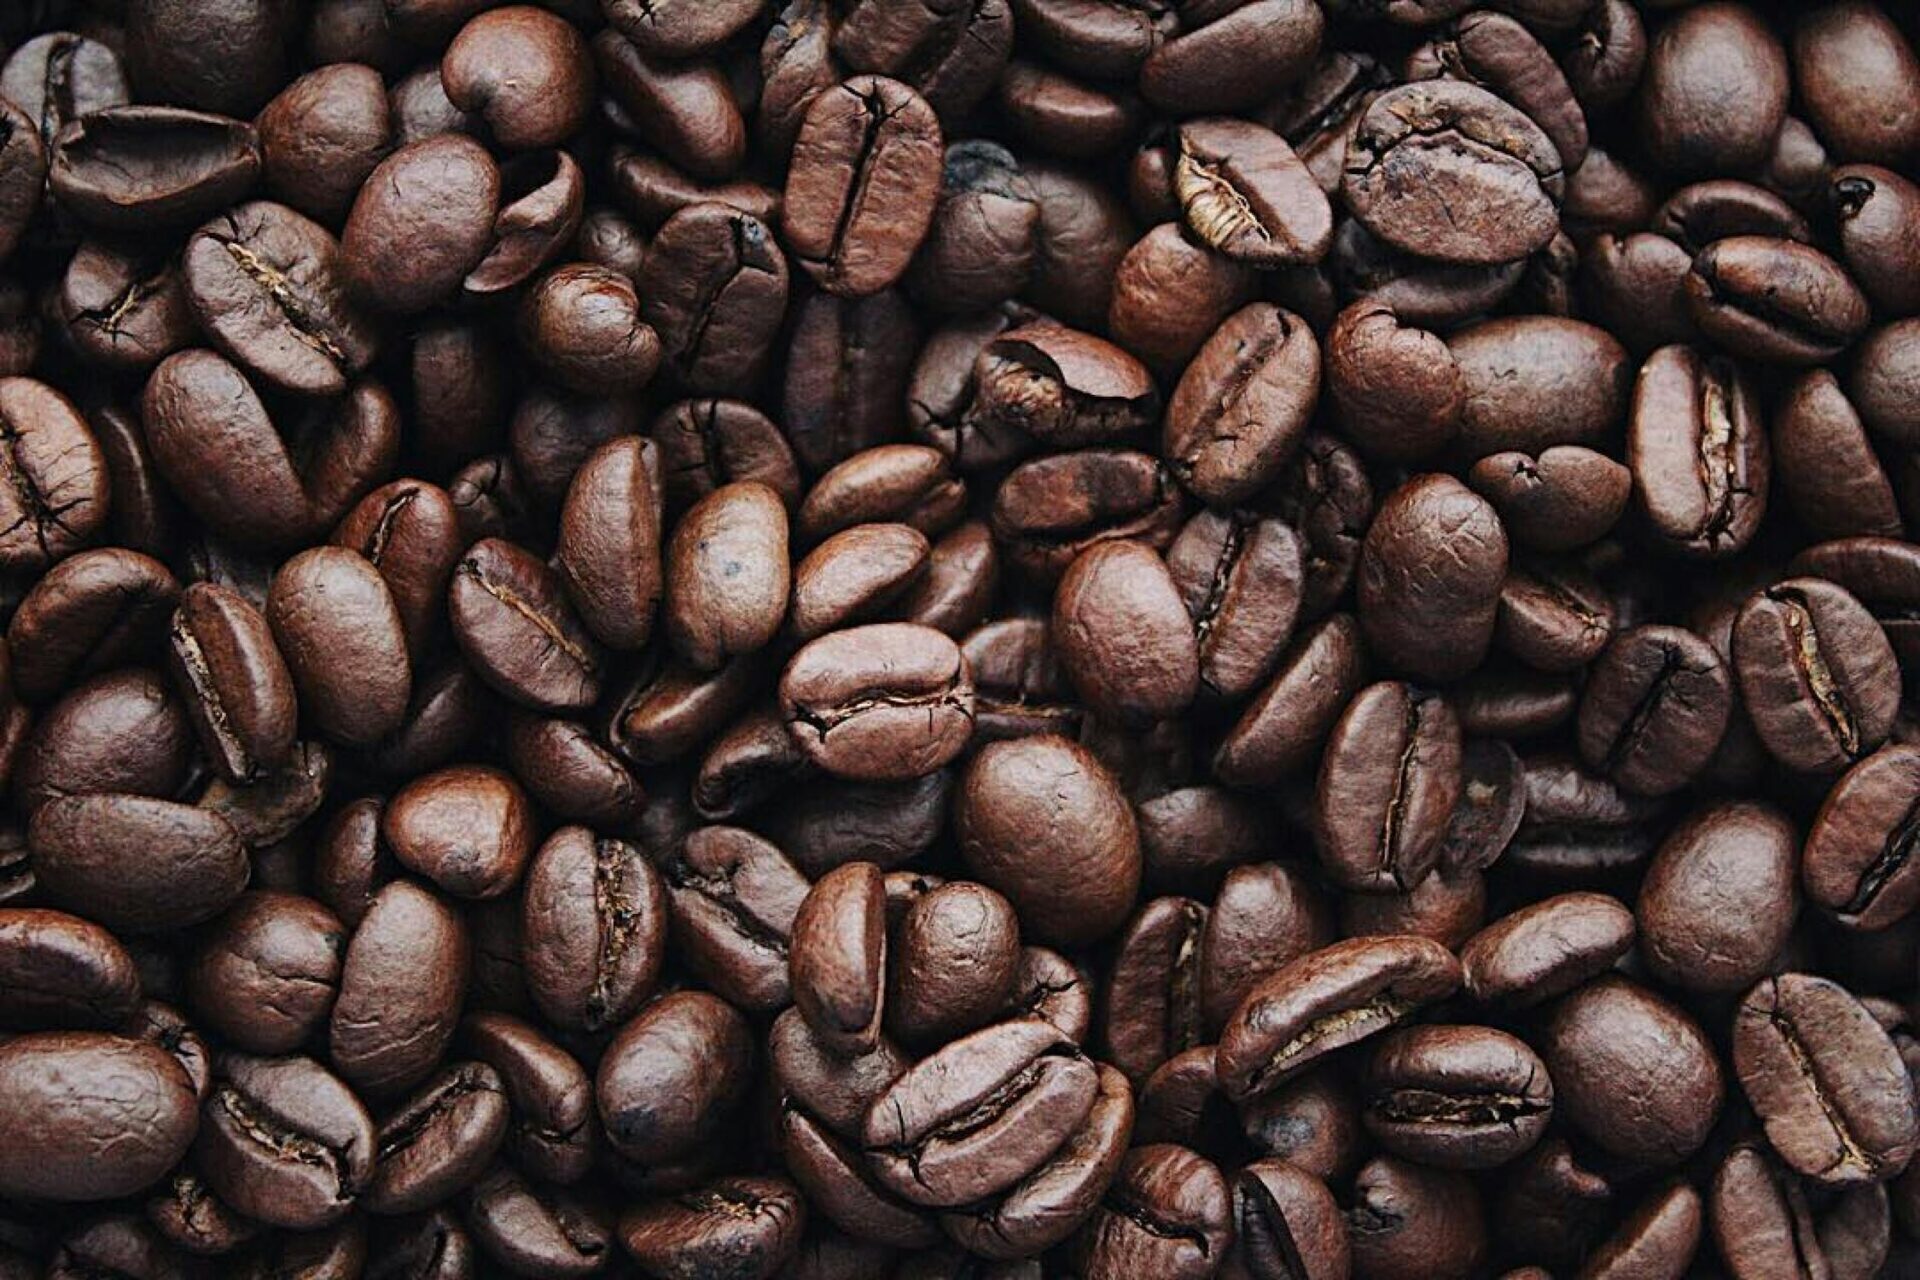 Kona Hawaiian coffee is famous for its smooth, balanced, and slightly nutty flavor. 